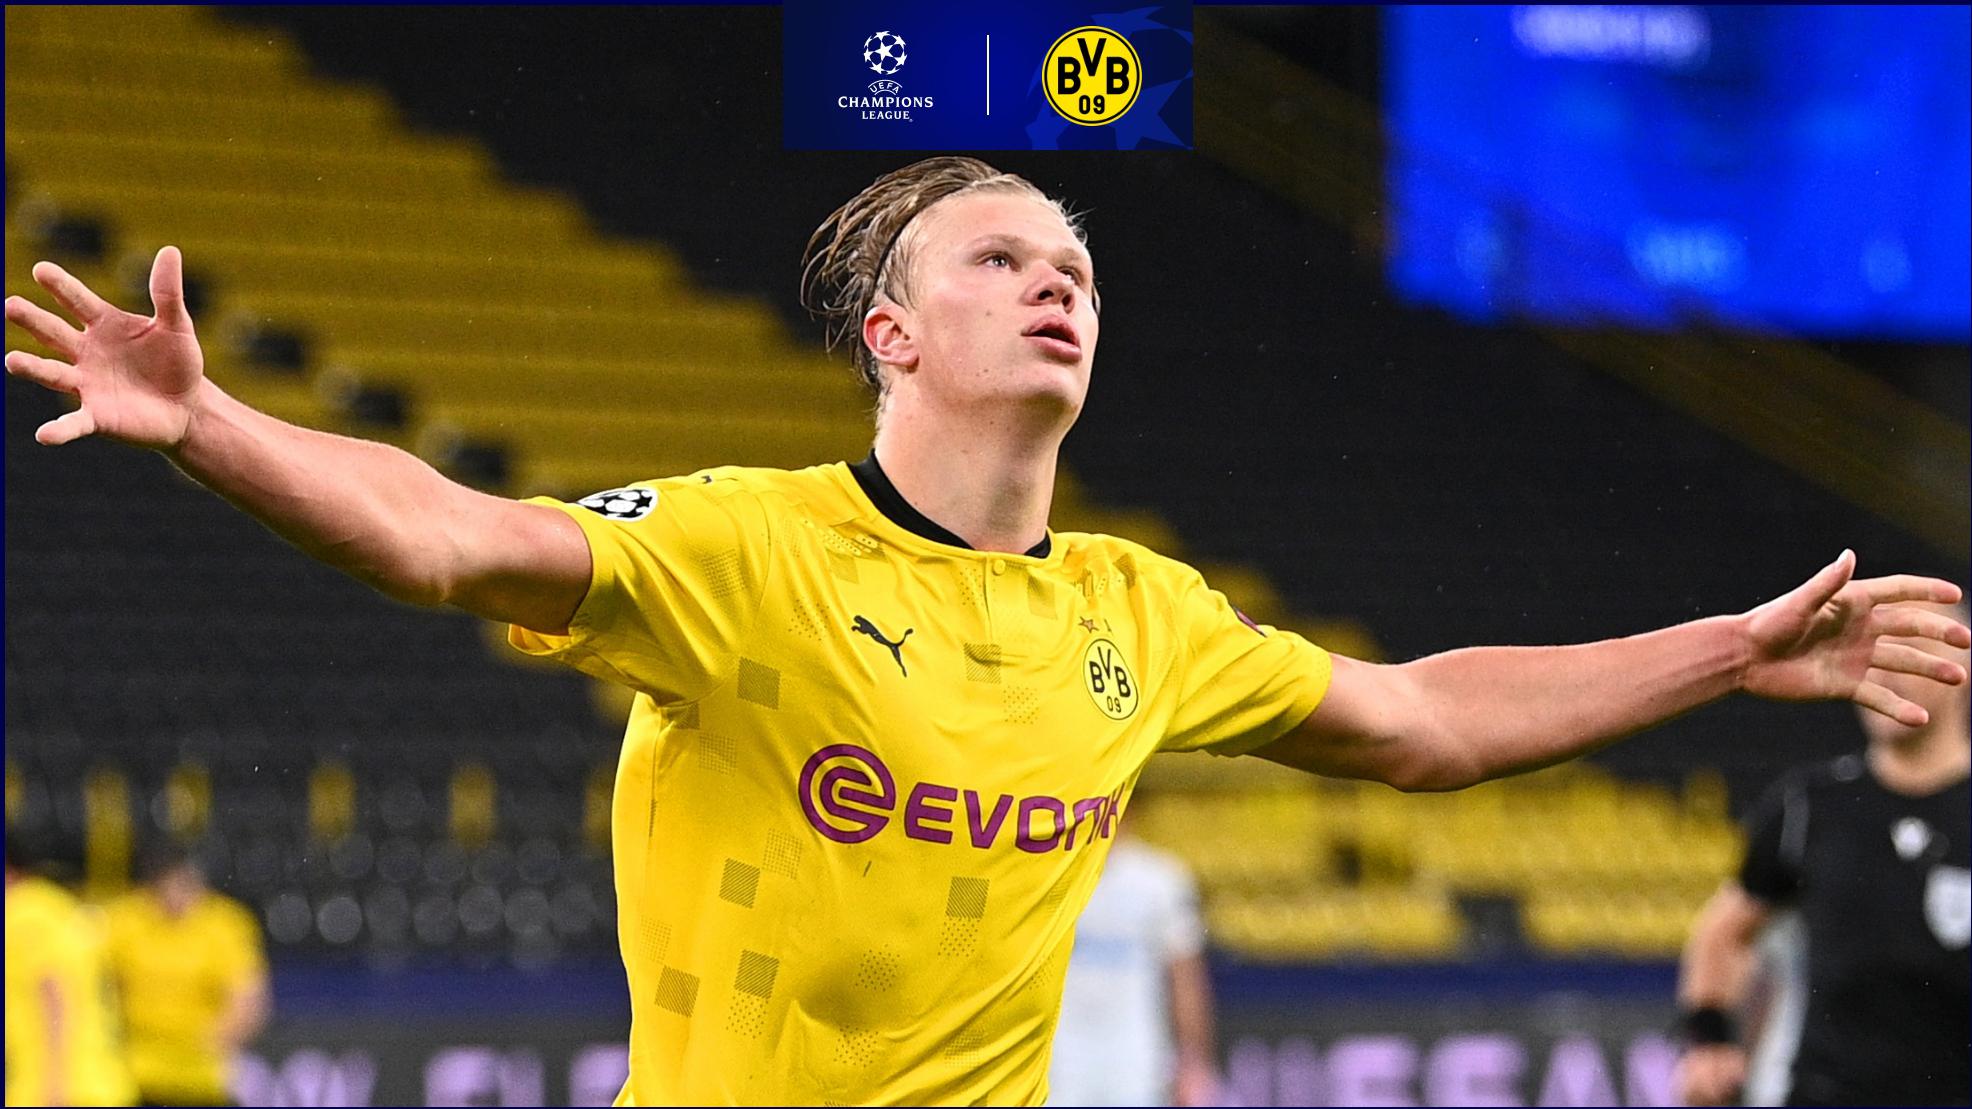 Recap: Haaland the star for Dortmund